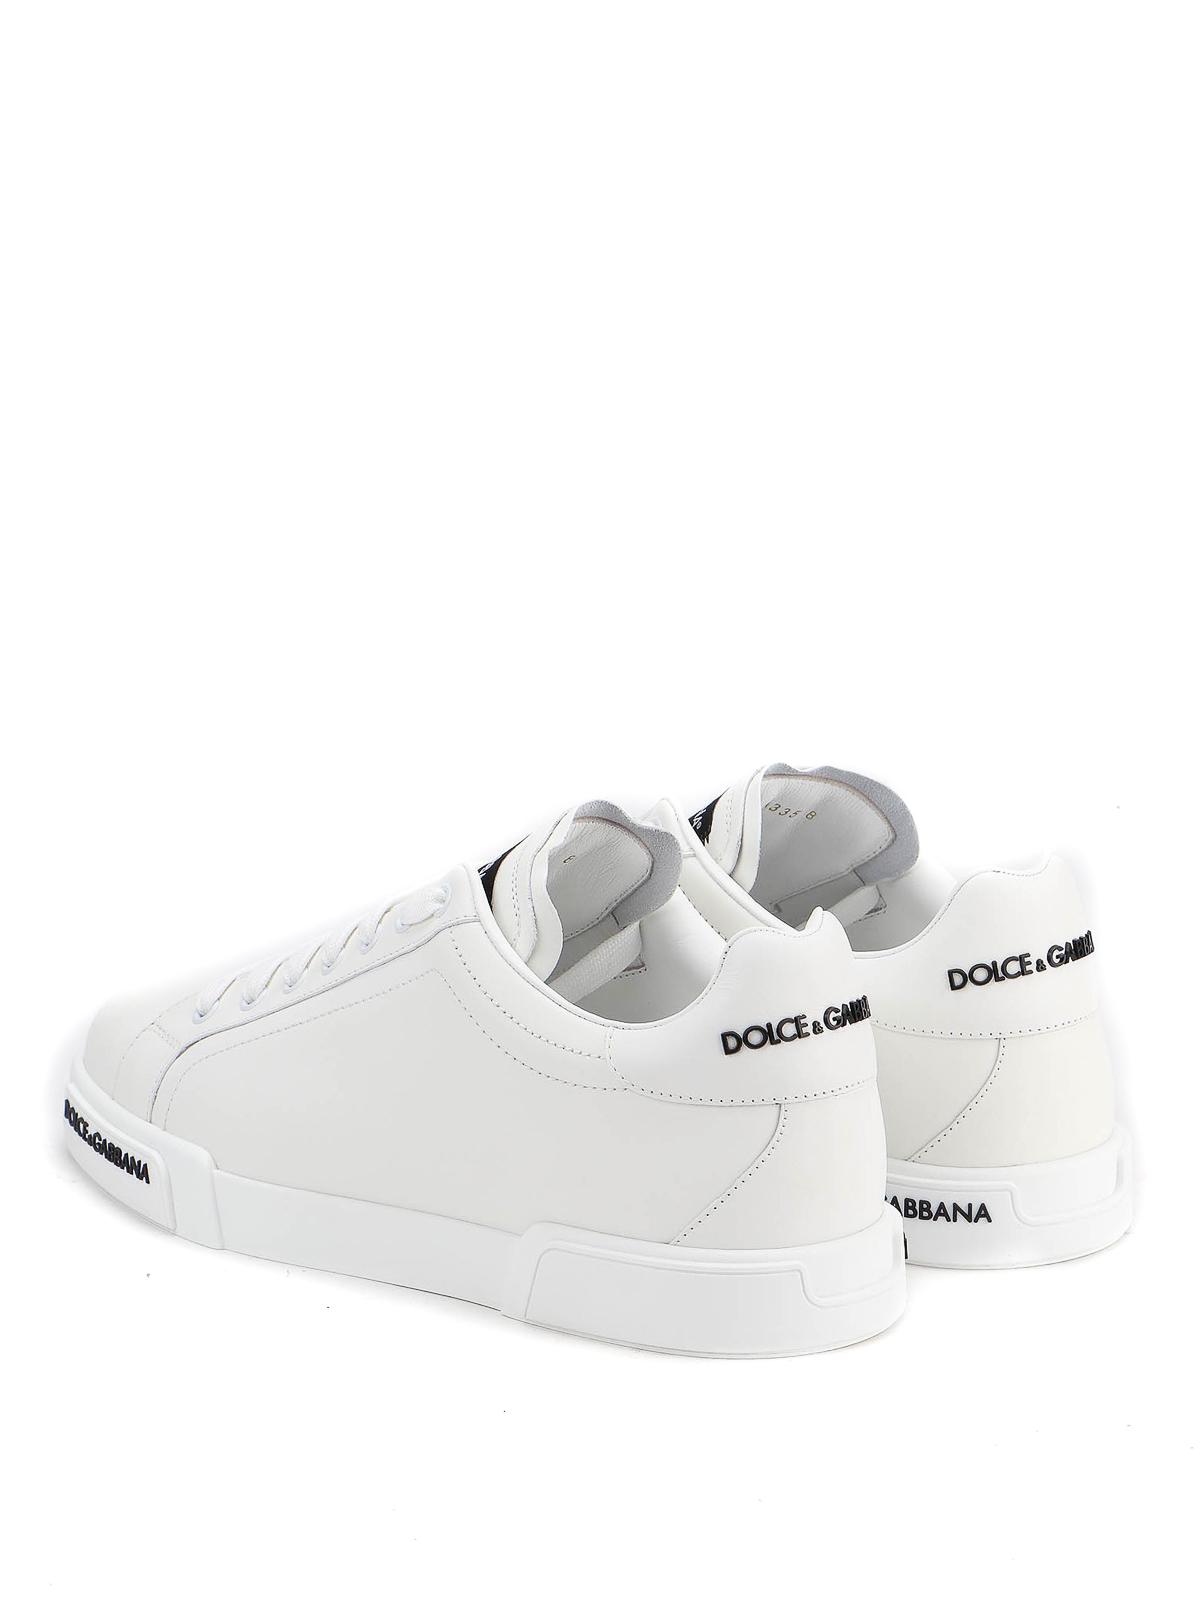 Dolce & Gabbana Sorrento Sneakers in White for Men - Save 26% - Lyst